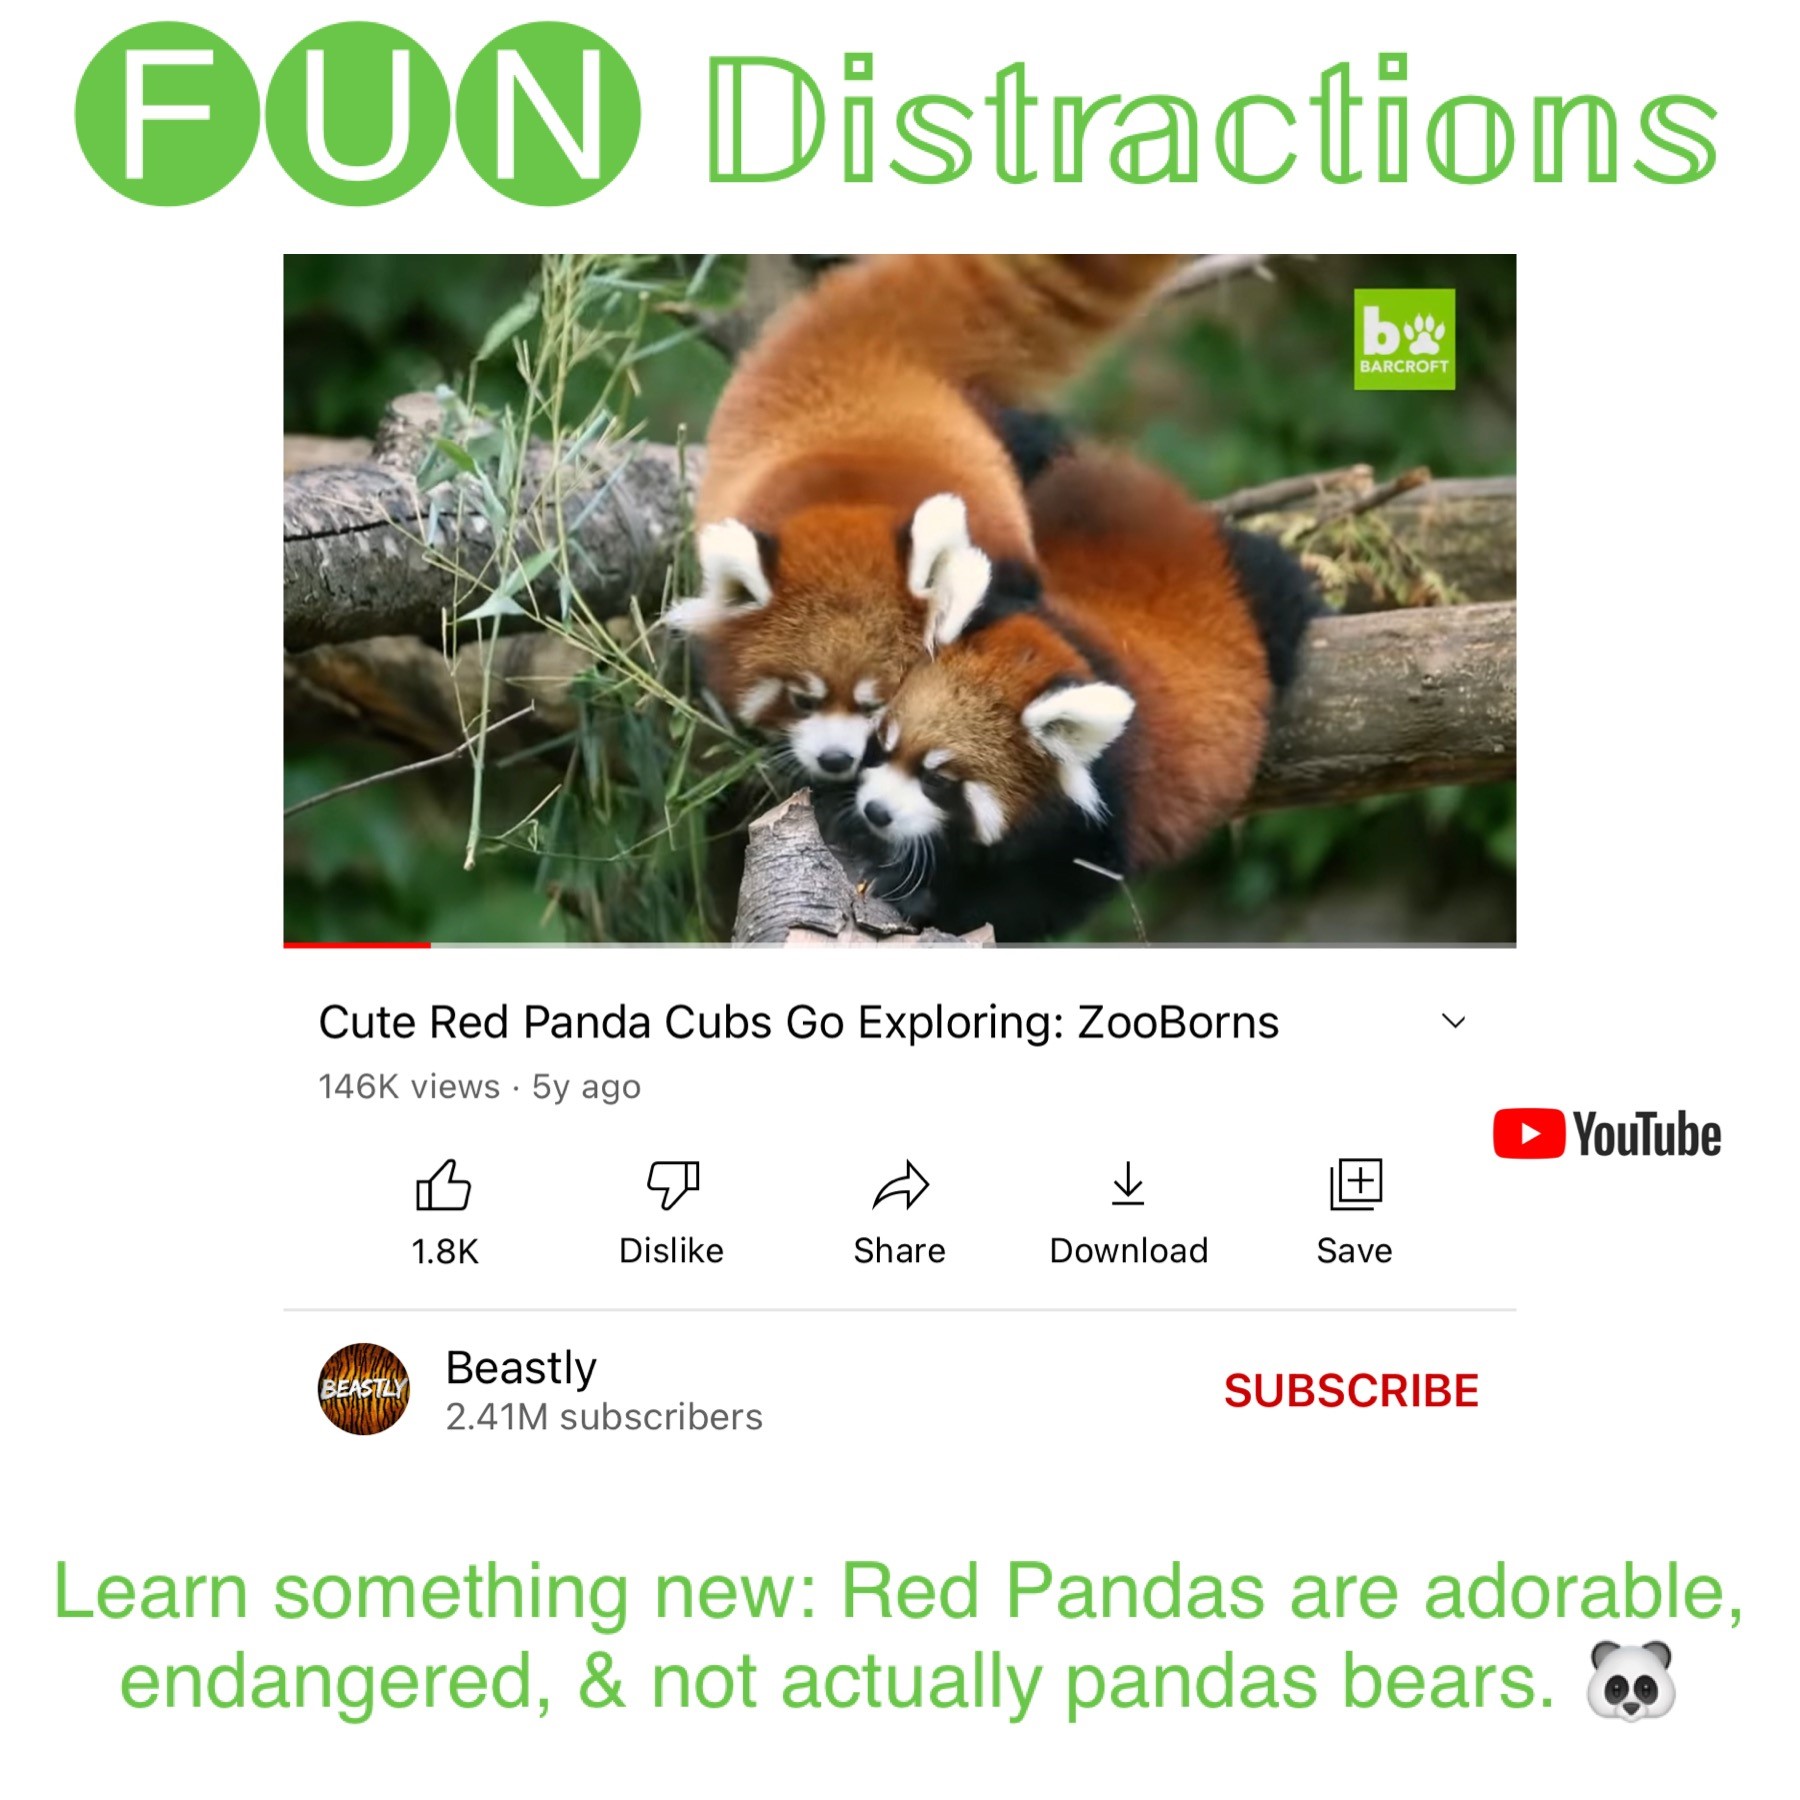 Image of two red pandas